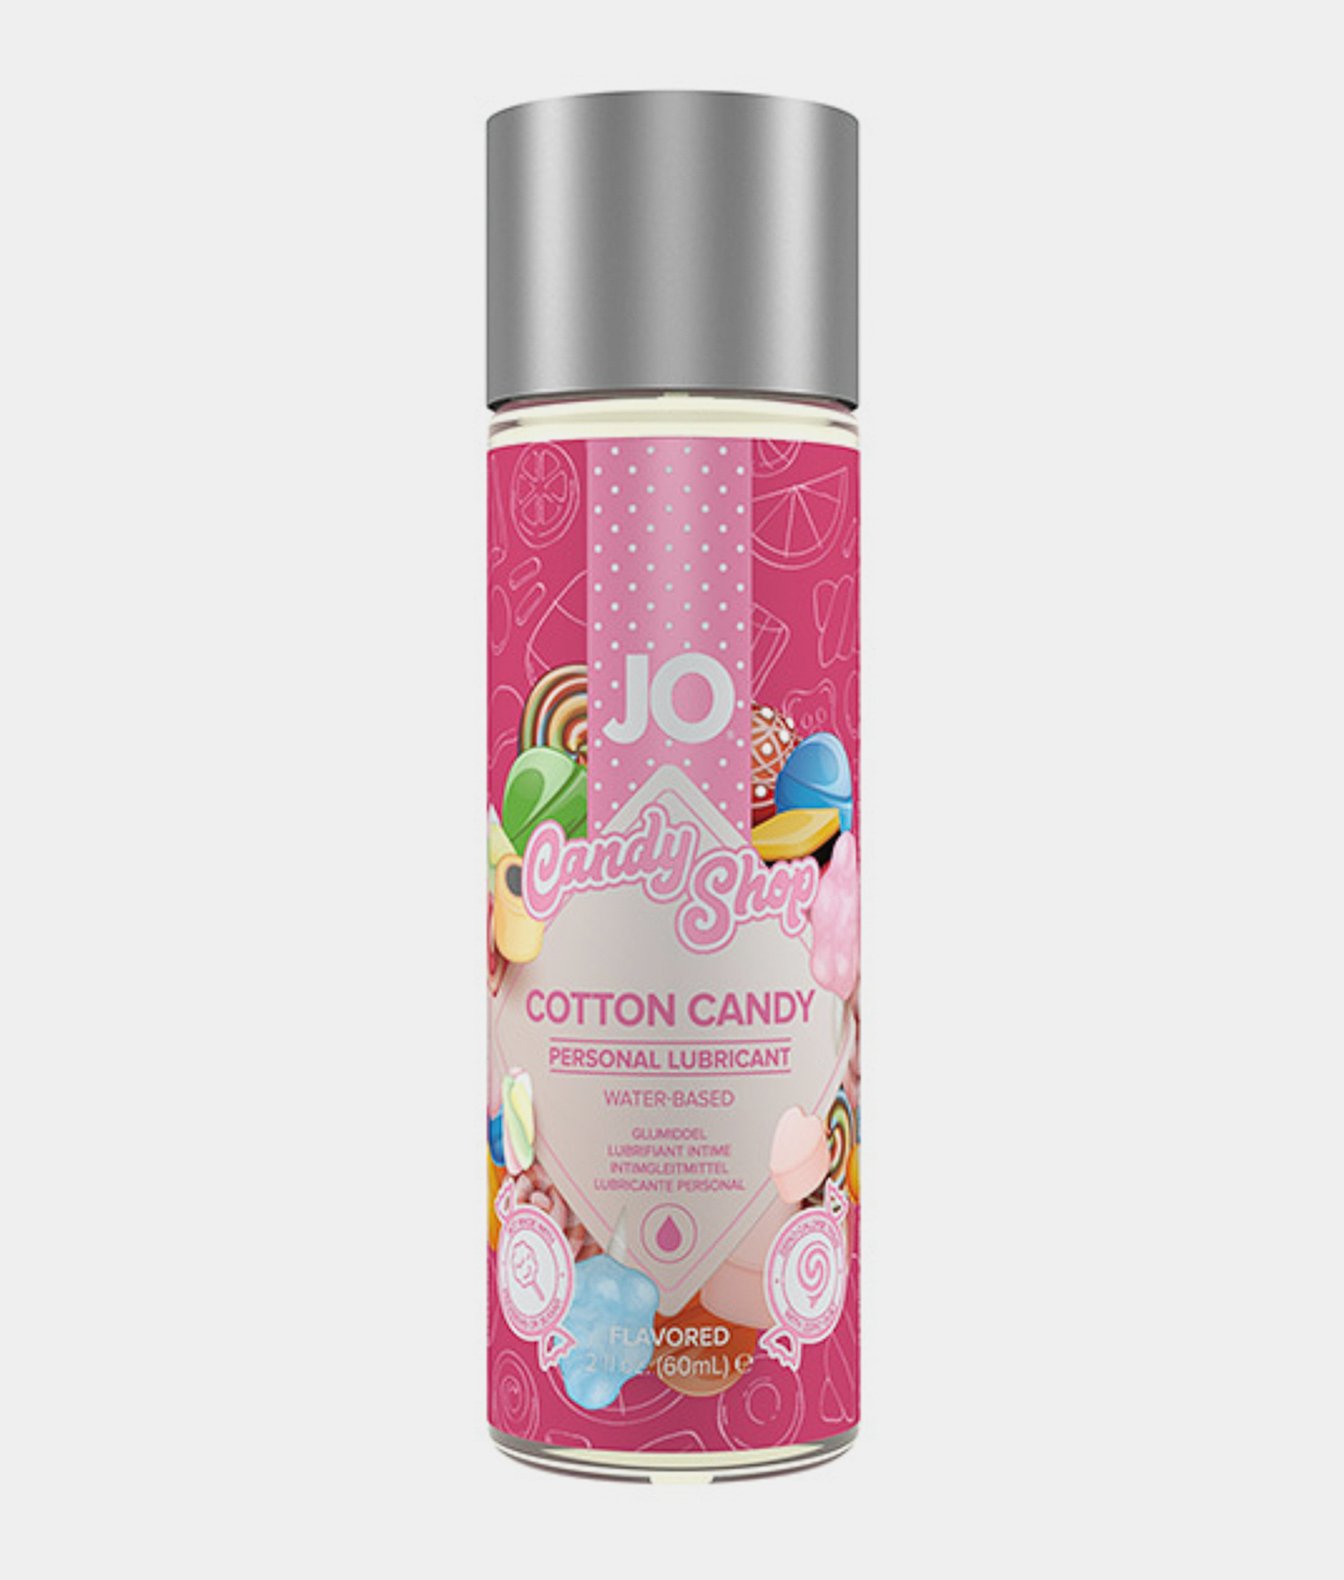 System Jo Candy Shop H2O cotton candy